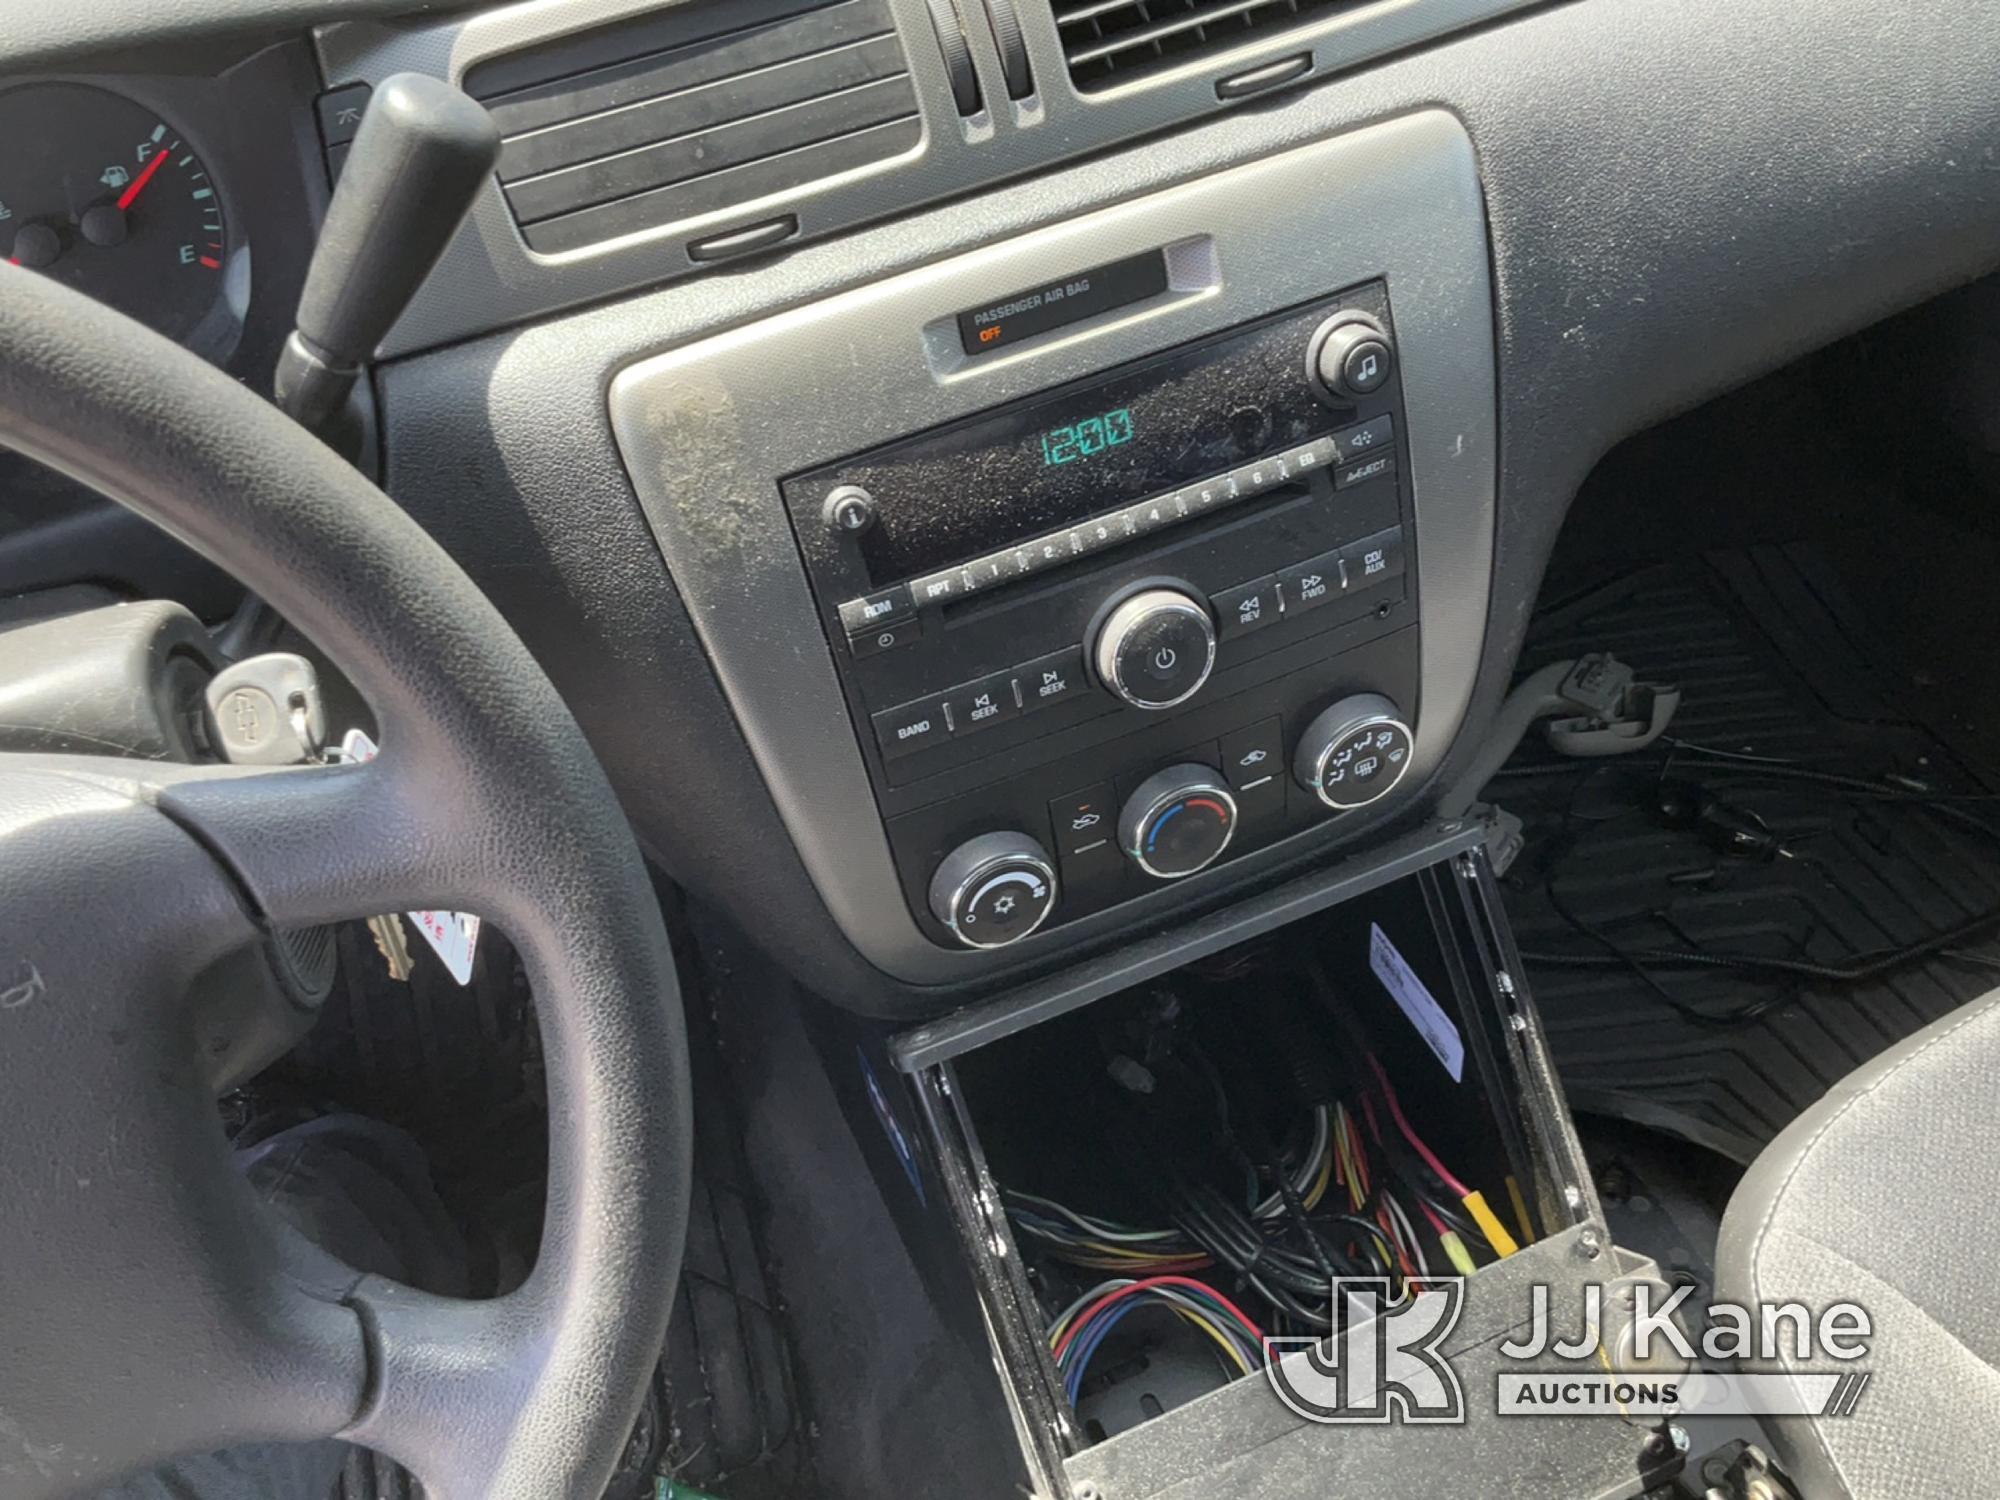 (Salt Lake City, UT) 2016 Chevrolet Impala 4-Door Sedan Runs & Moves) (Wrecked Left Rear